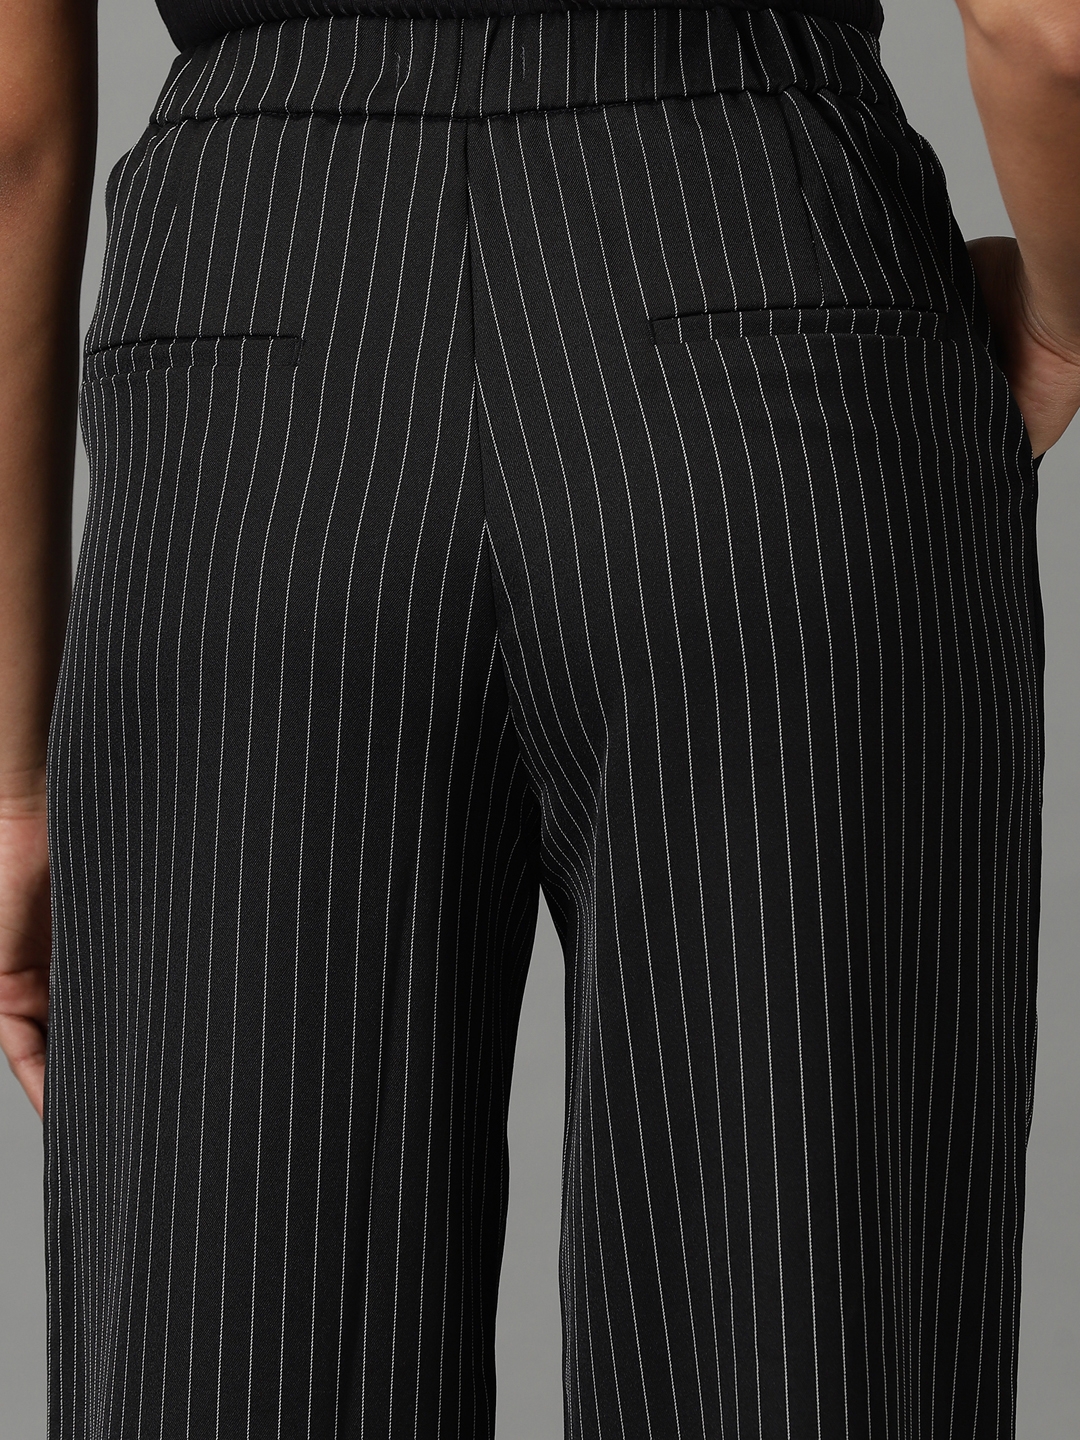 Buy Black Trousers  Pants for Women by Rare Online  Ajiocom